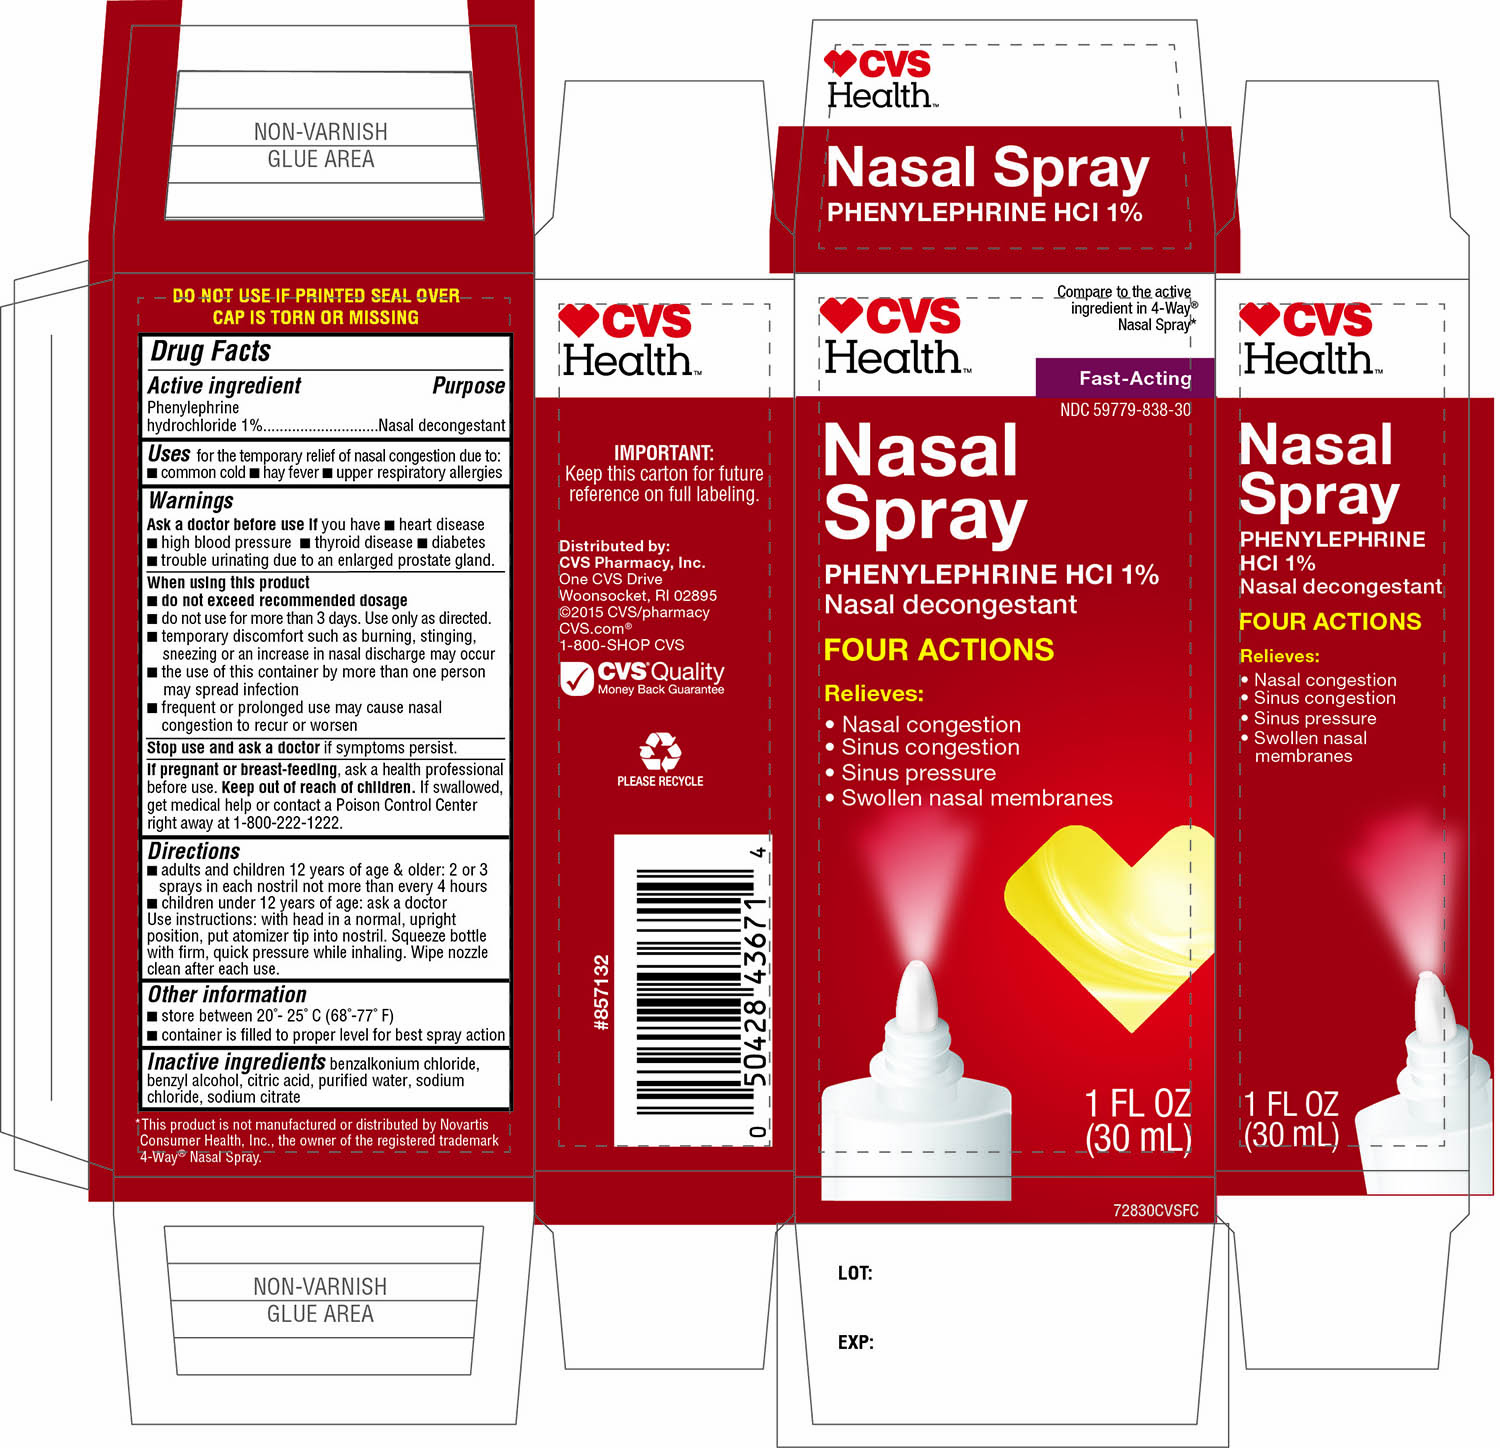 CVS Health Large Nasal Strips, Tan, 30 CT Ingredients - CVS Pharmacy